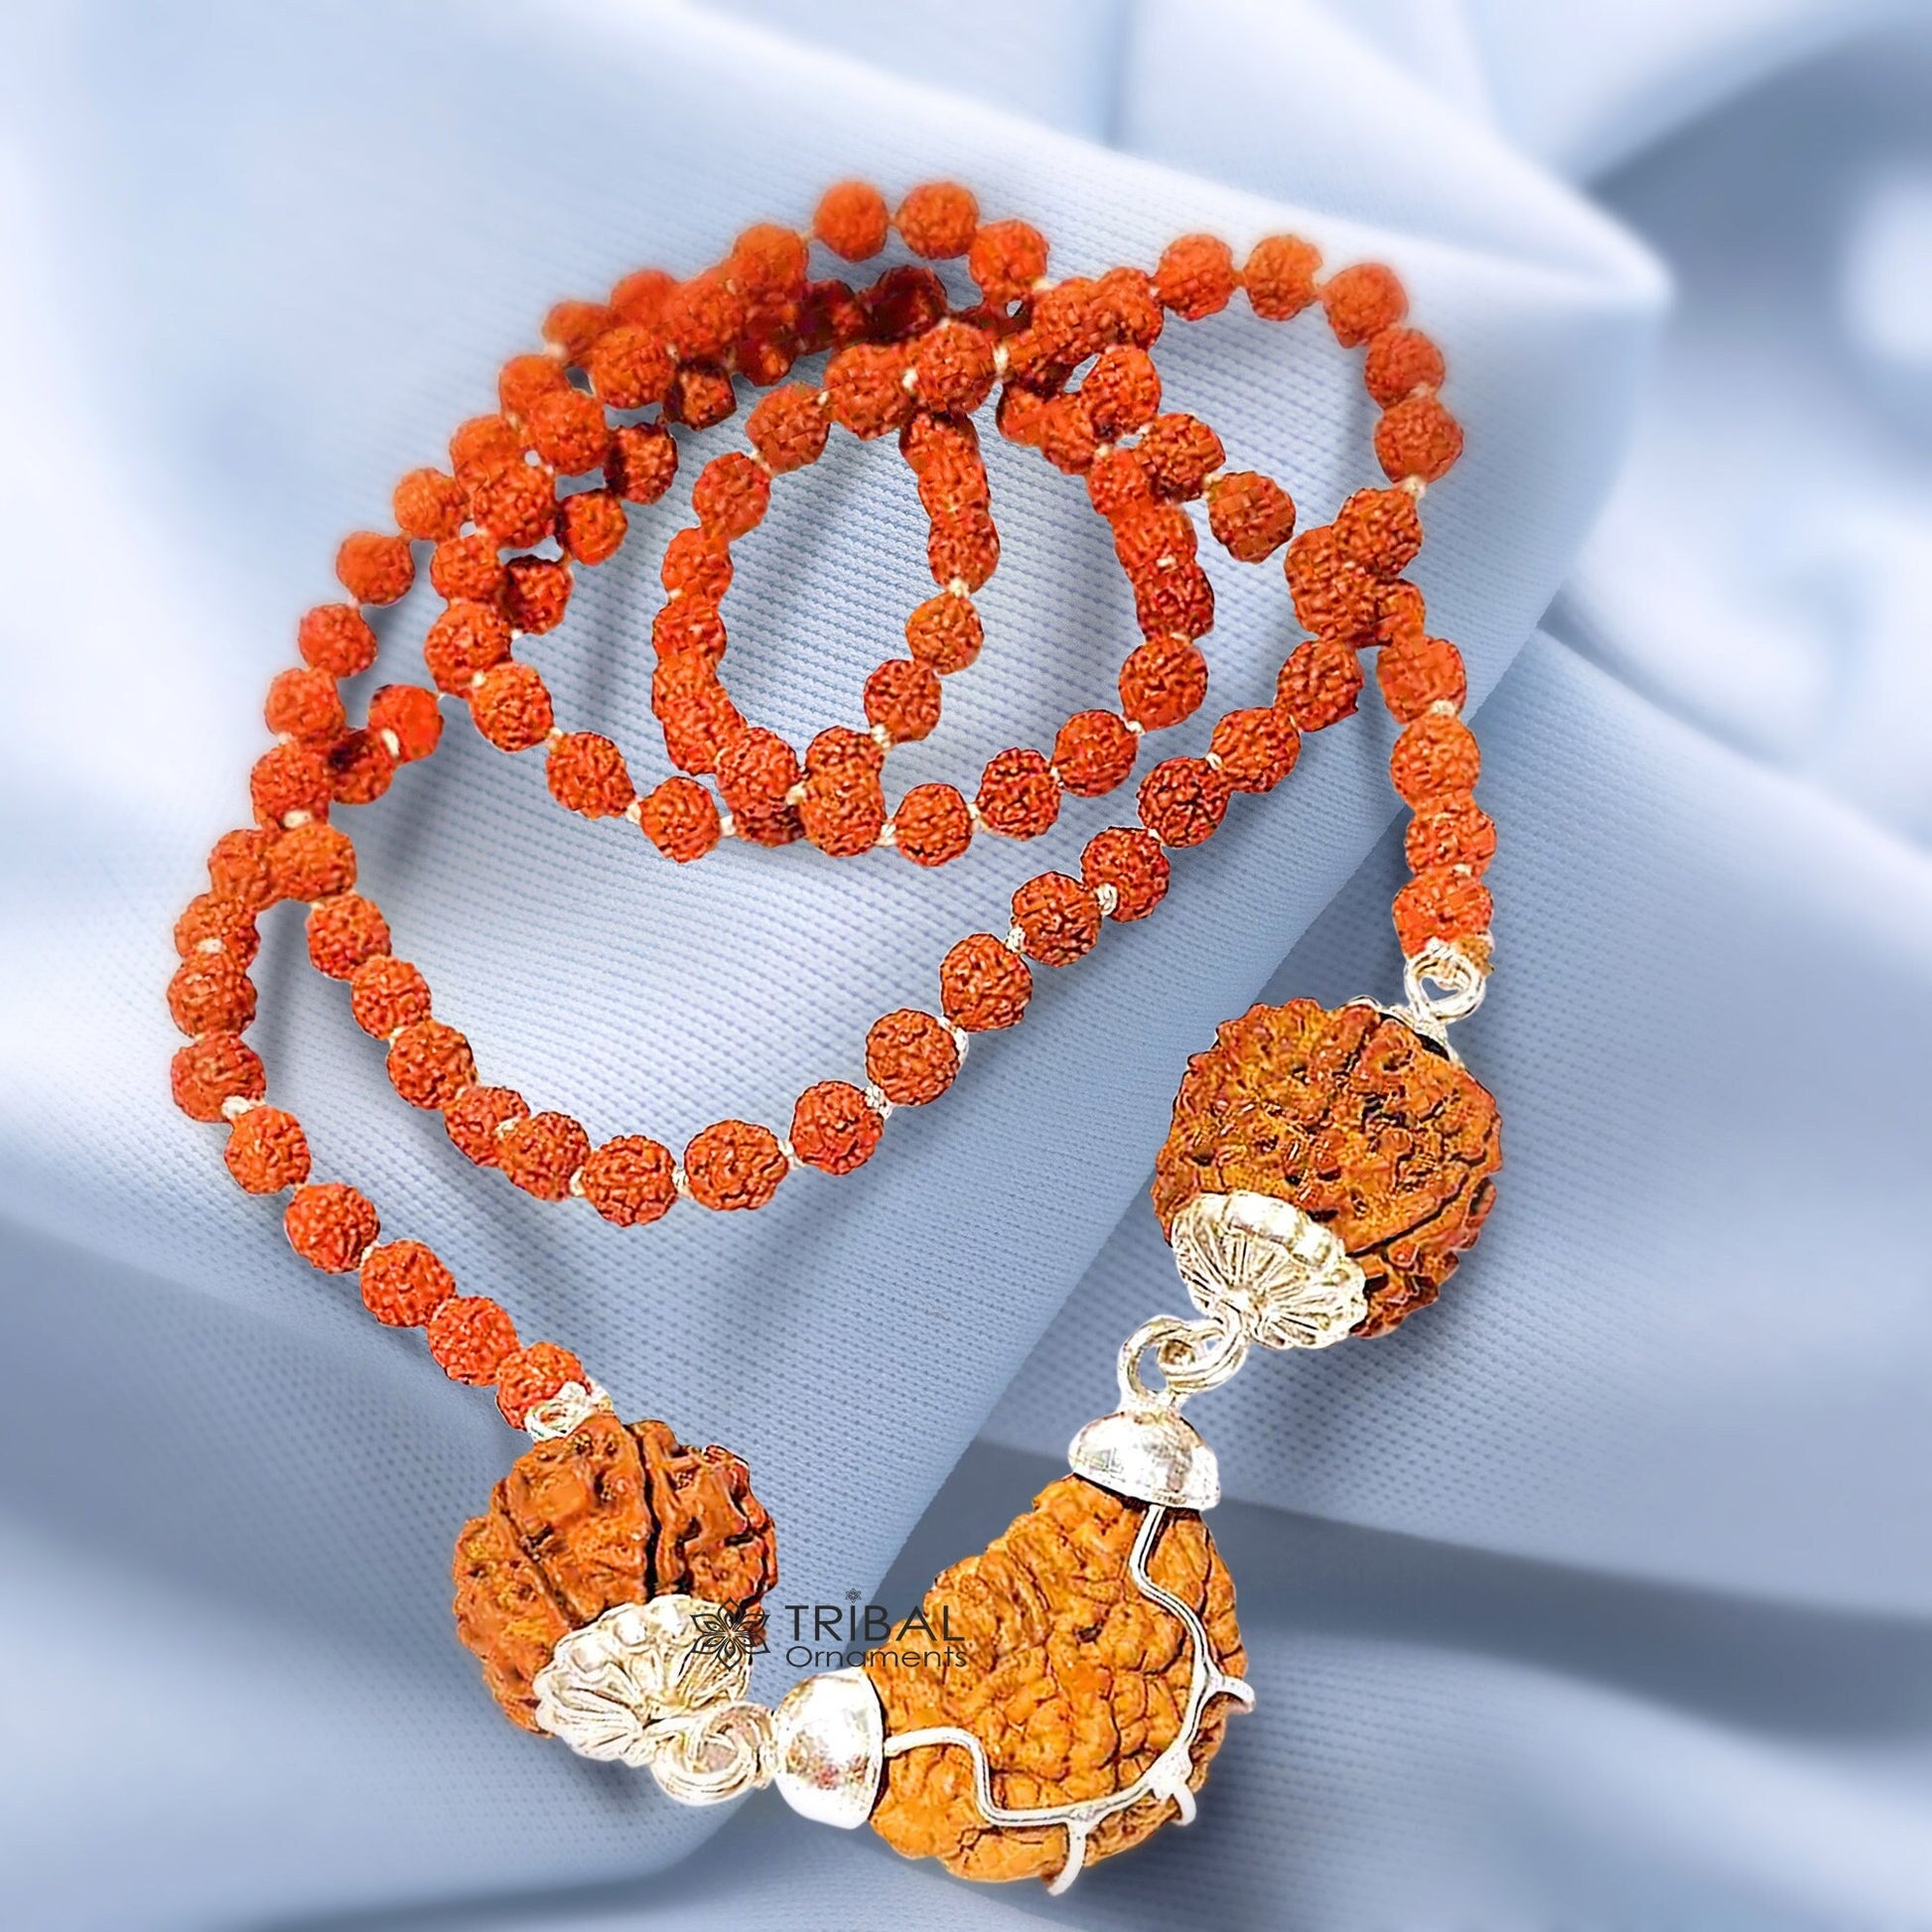 1 Mukhi Rudraksha Sampoorn Kavach covered in 925 sterling silver, best meditation chain necklace, r1004 - TRIBAL ORNAMENTS